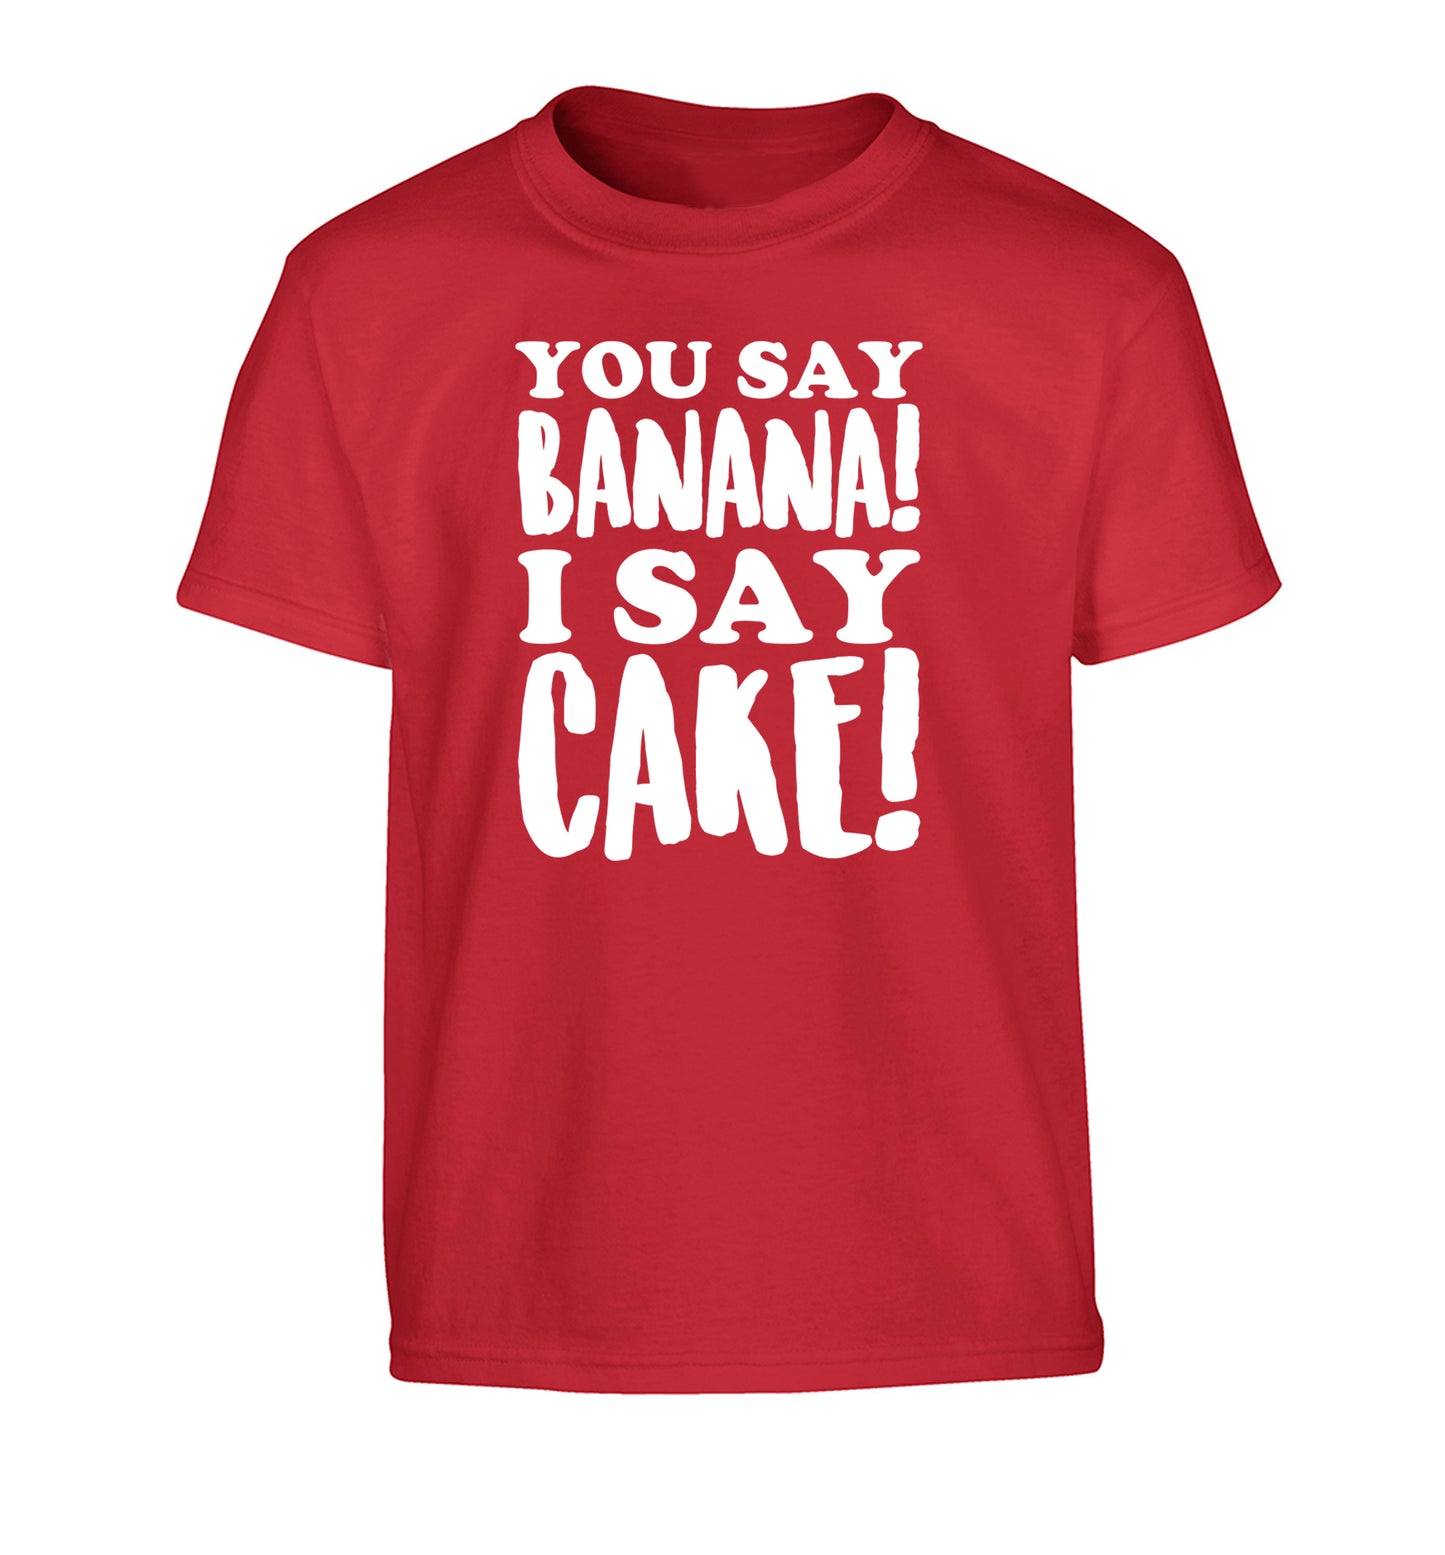 You say banana I say cake! Children's red Tshirt 12-14 Years